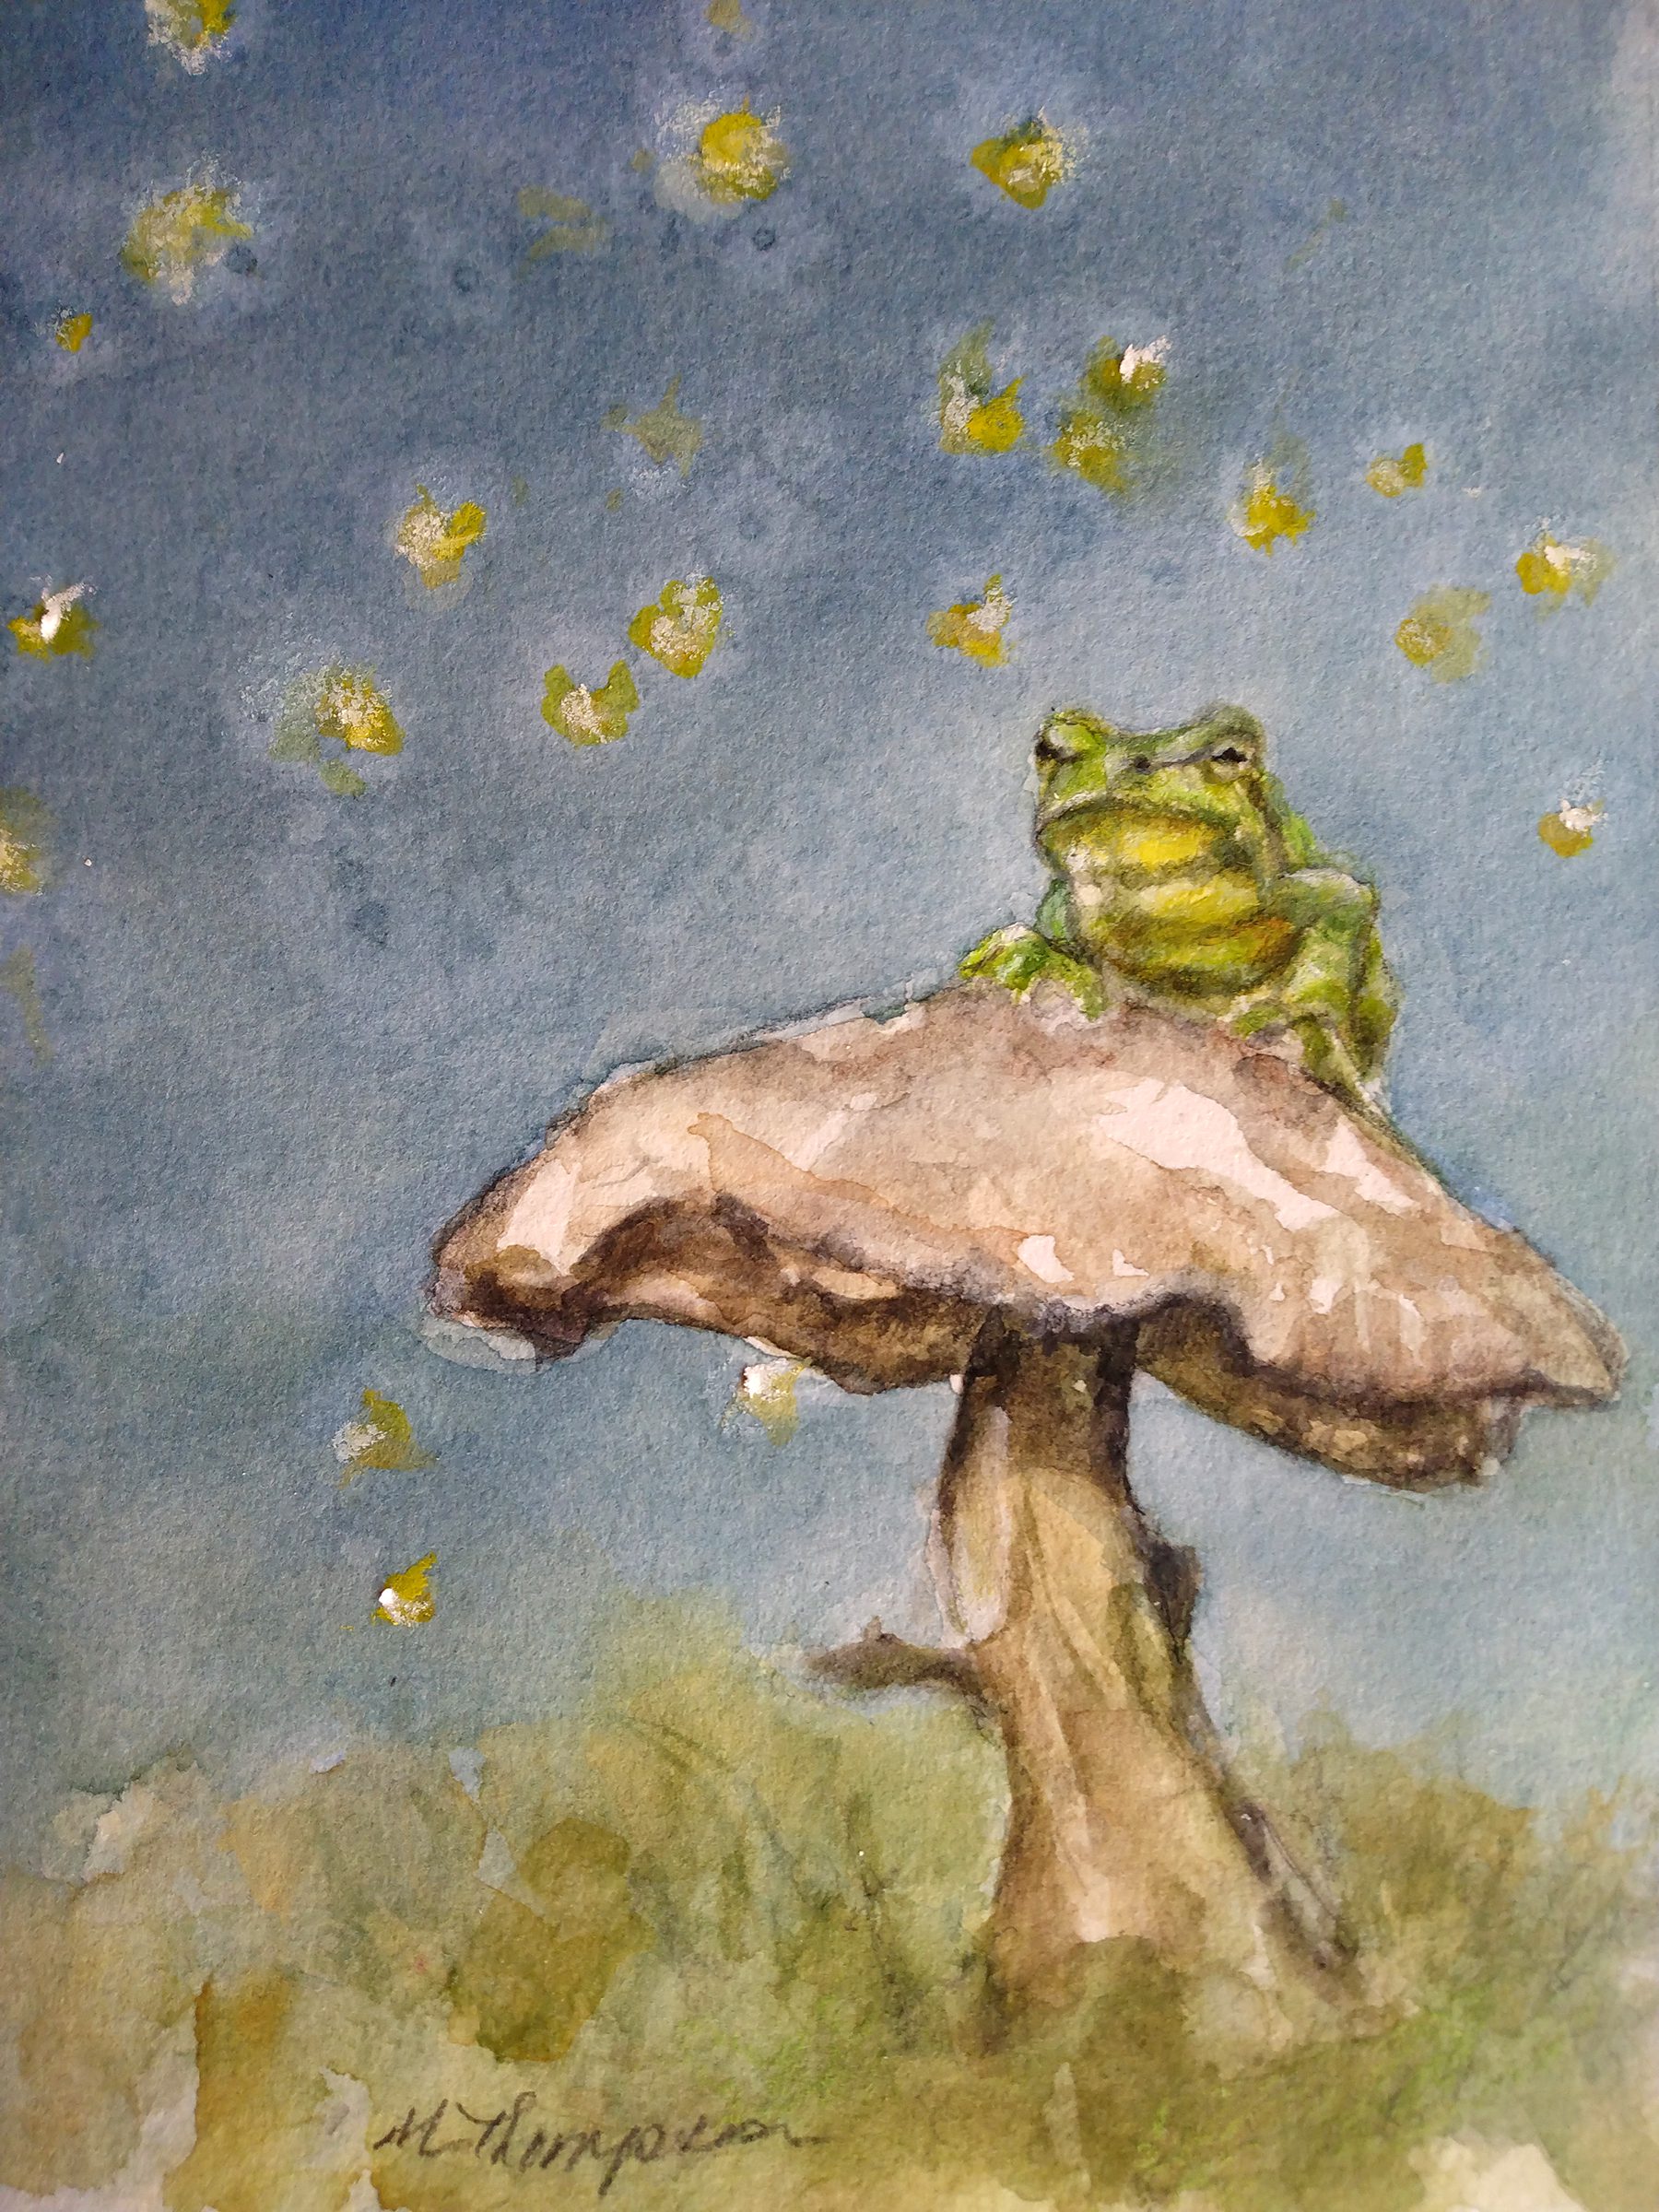 Frog and fireflies